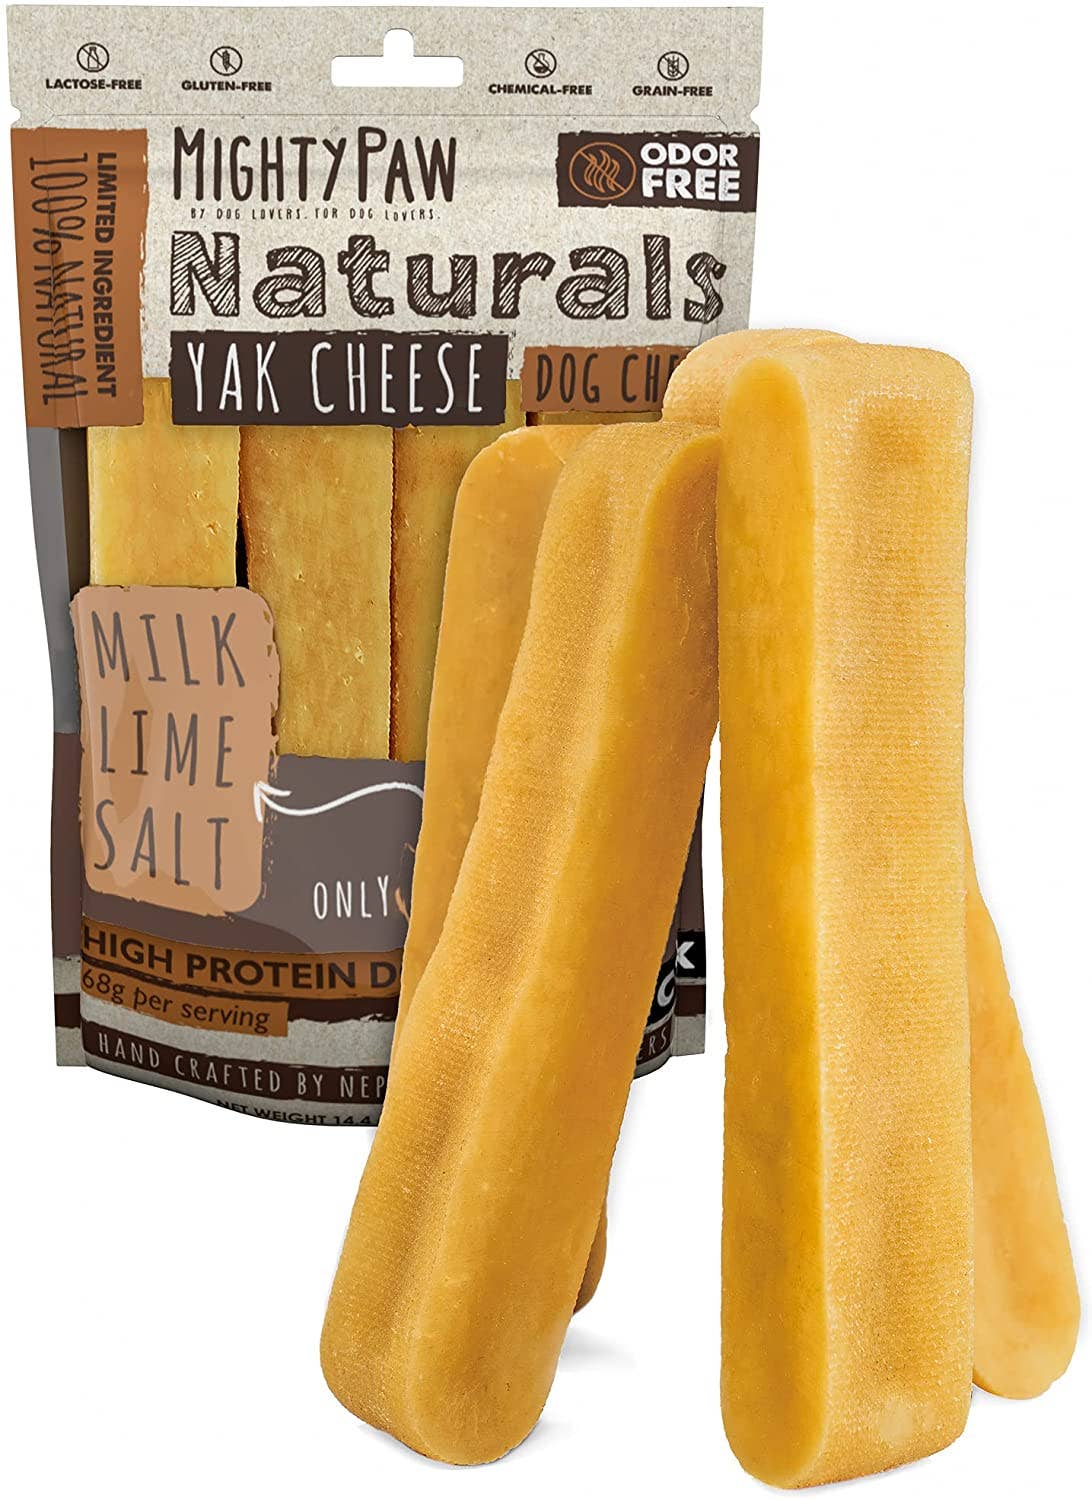 Naturals Yak Cheese Dog Chews: Large 8 Pack